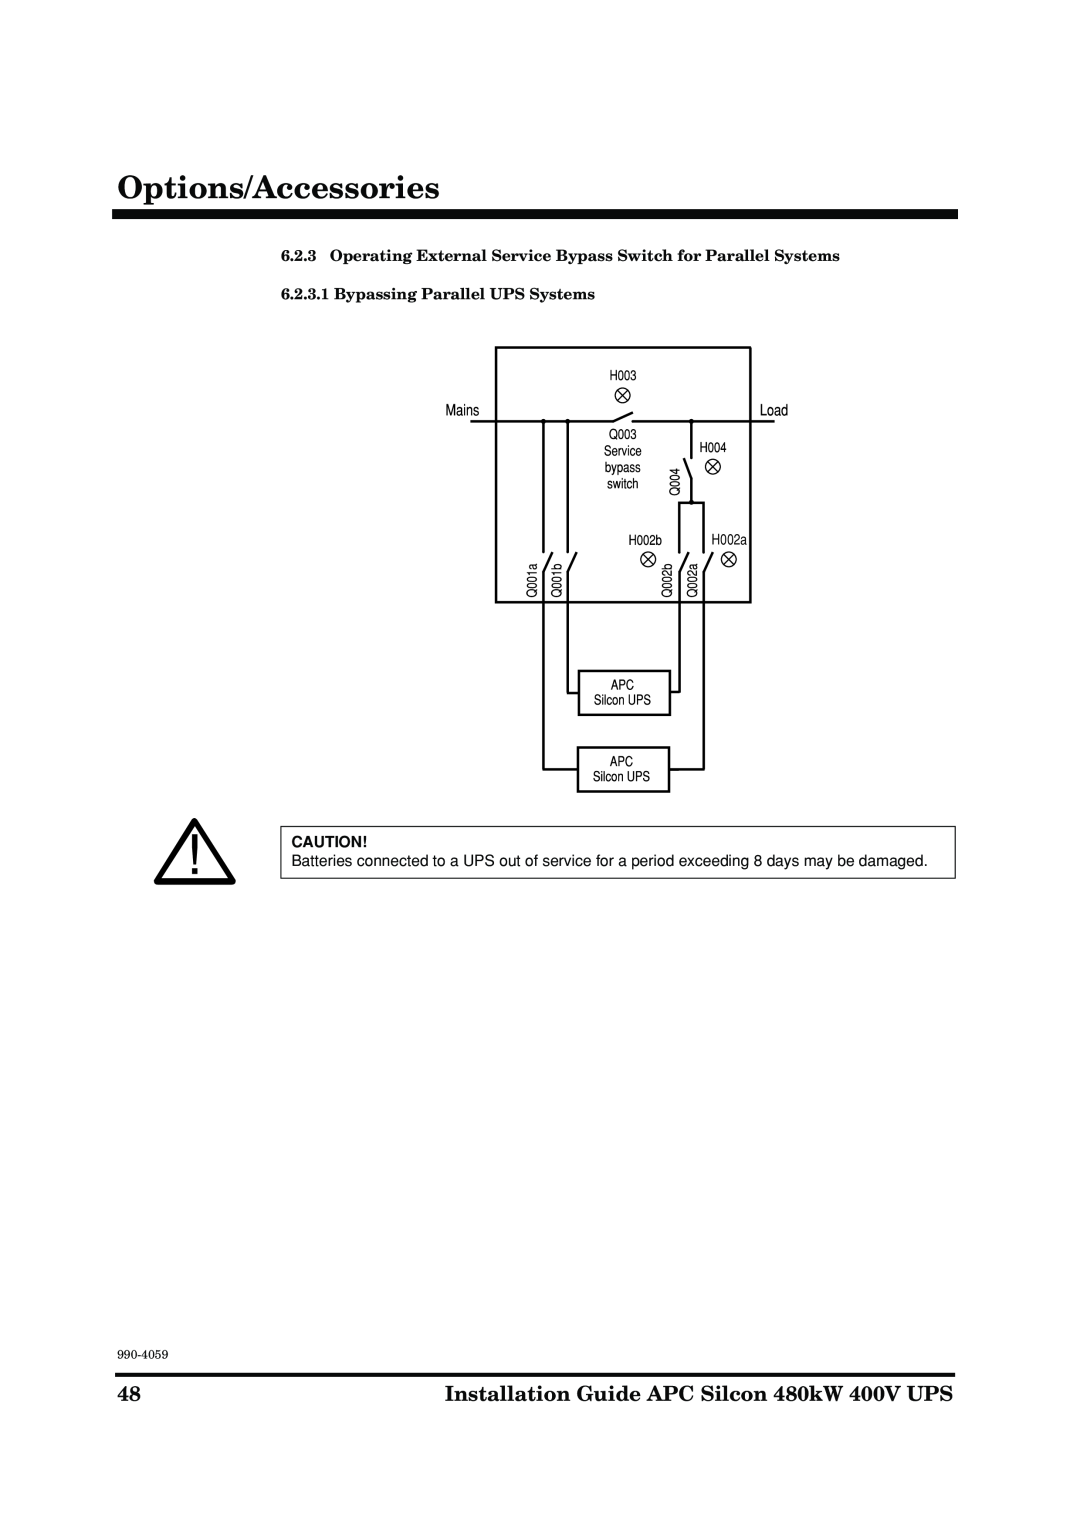 American Power Conversion manual Options/Accessories, Installation Guide APC Silcon 480kW 400V UPS, H002a, 990-4059 